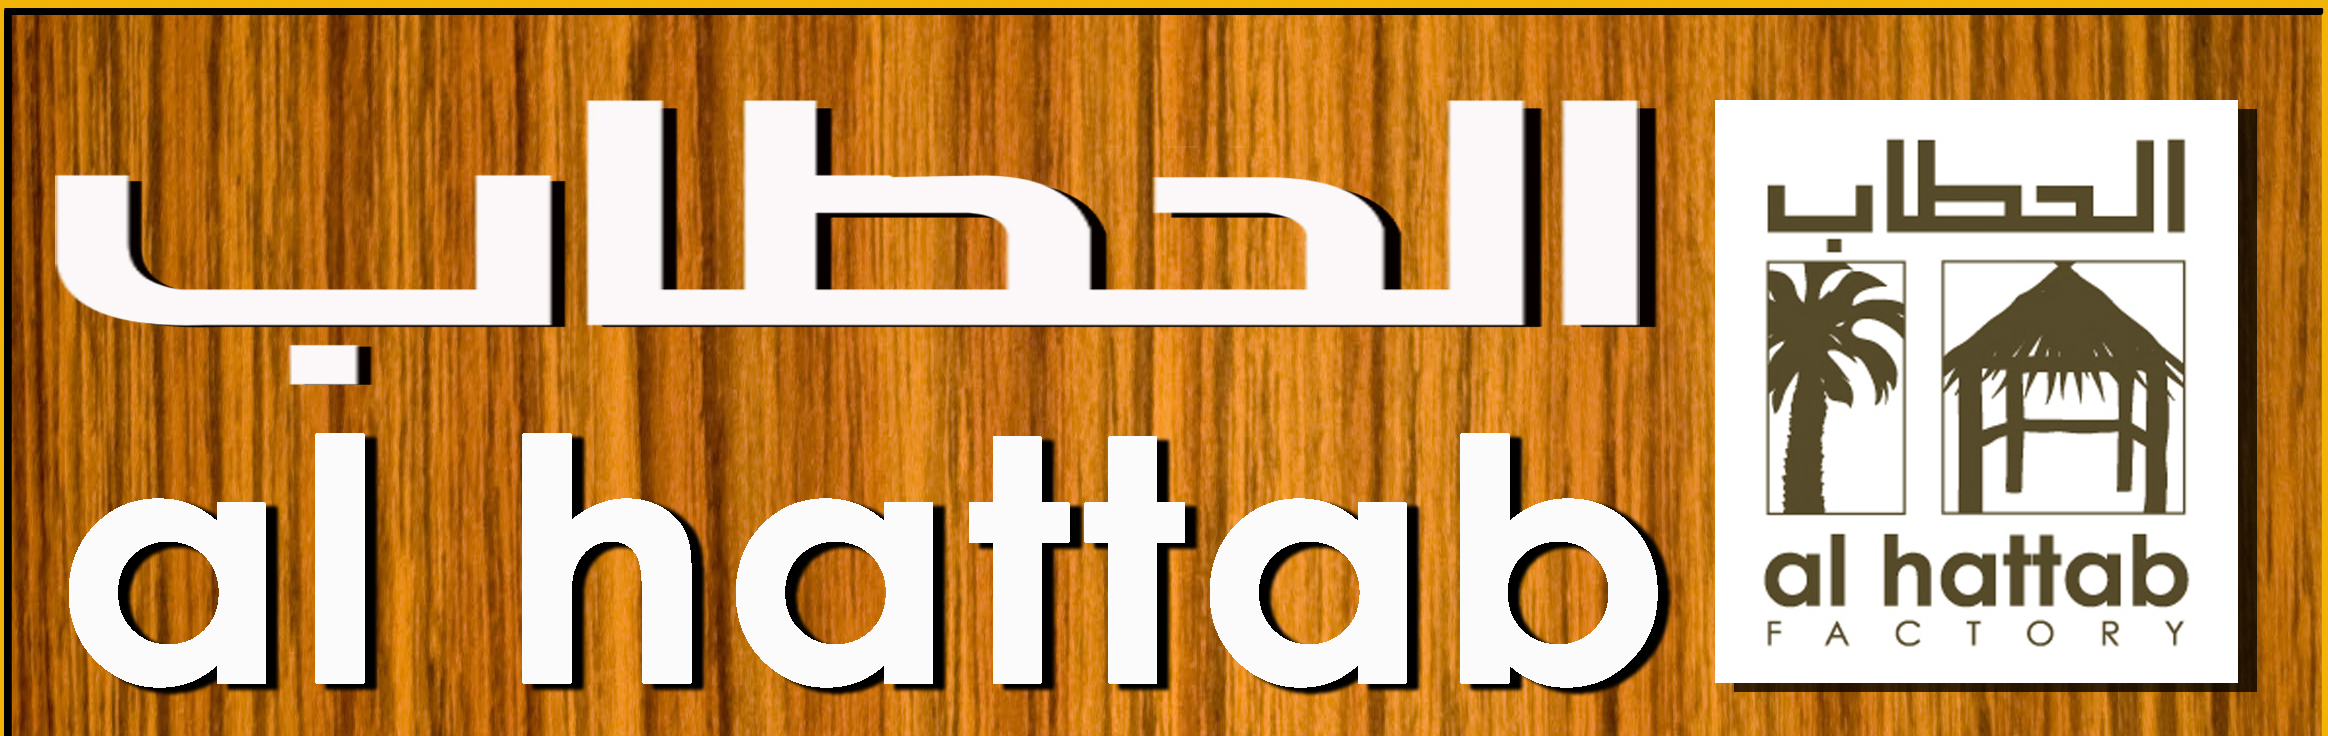 Al Hattab Factory Logo